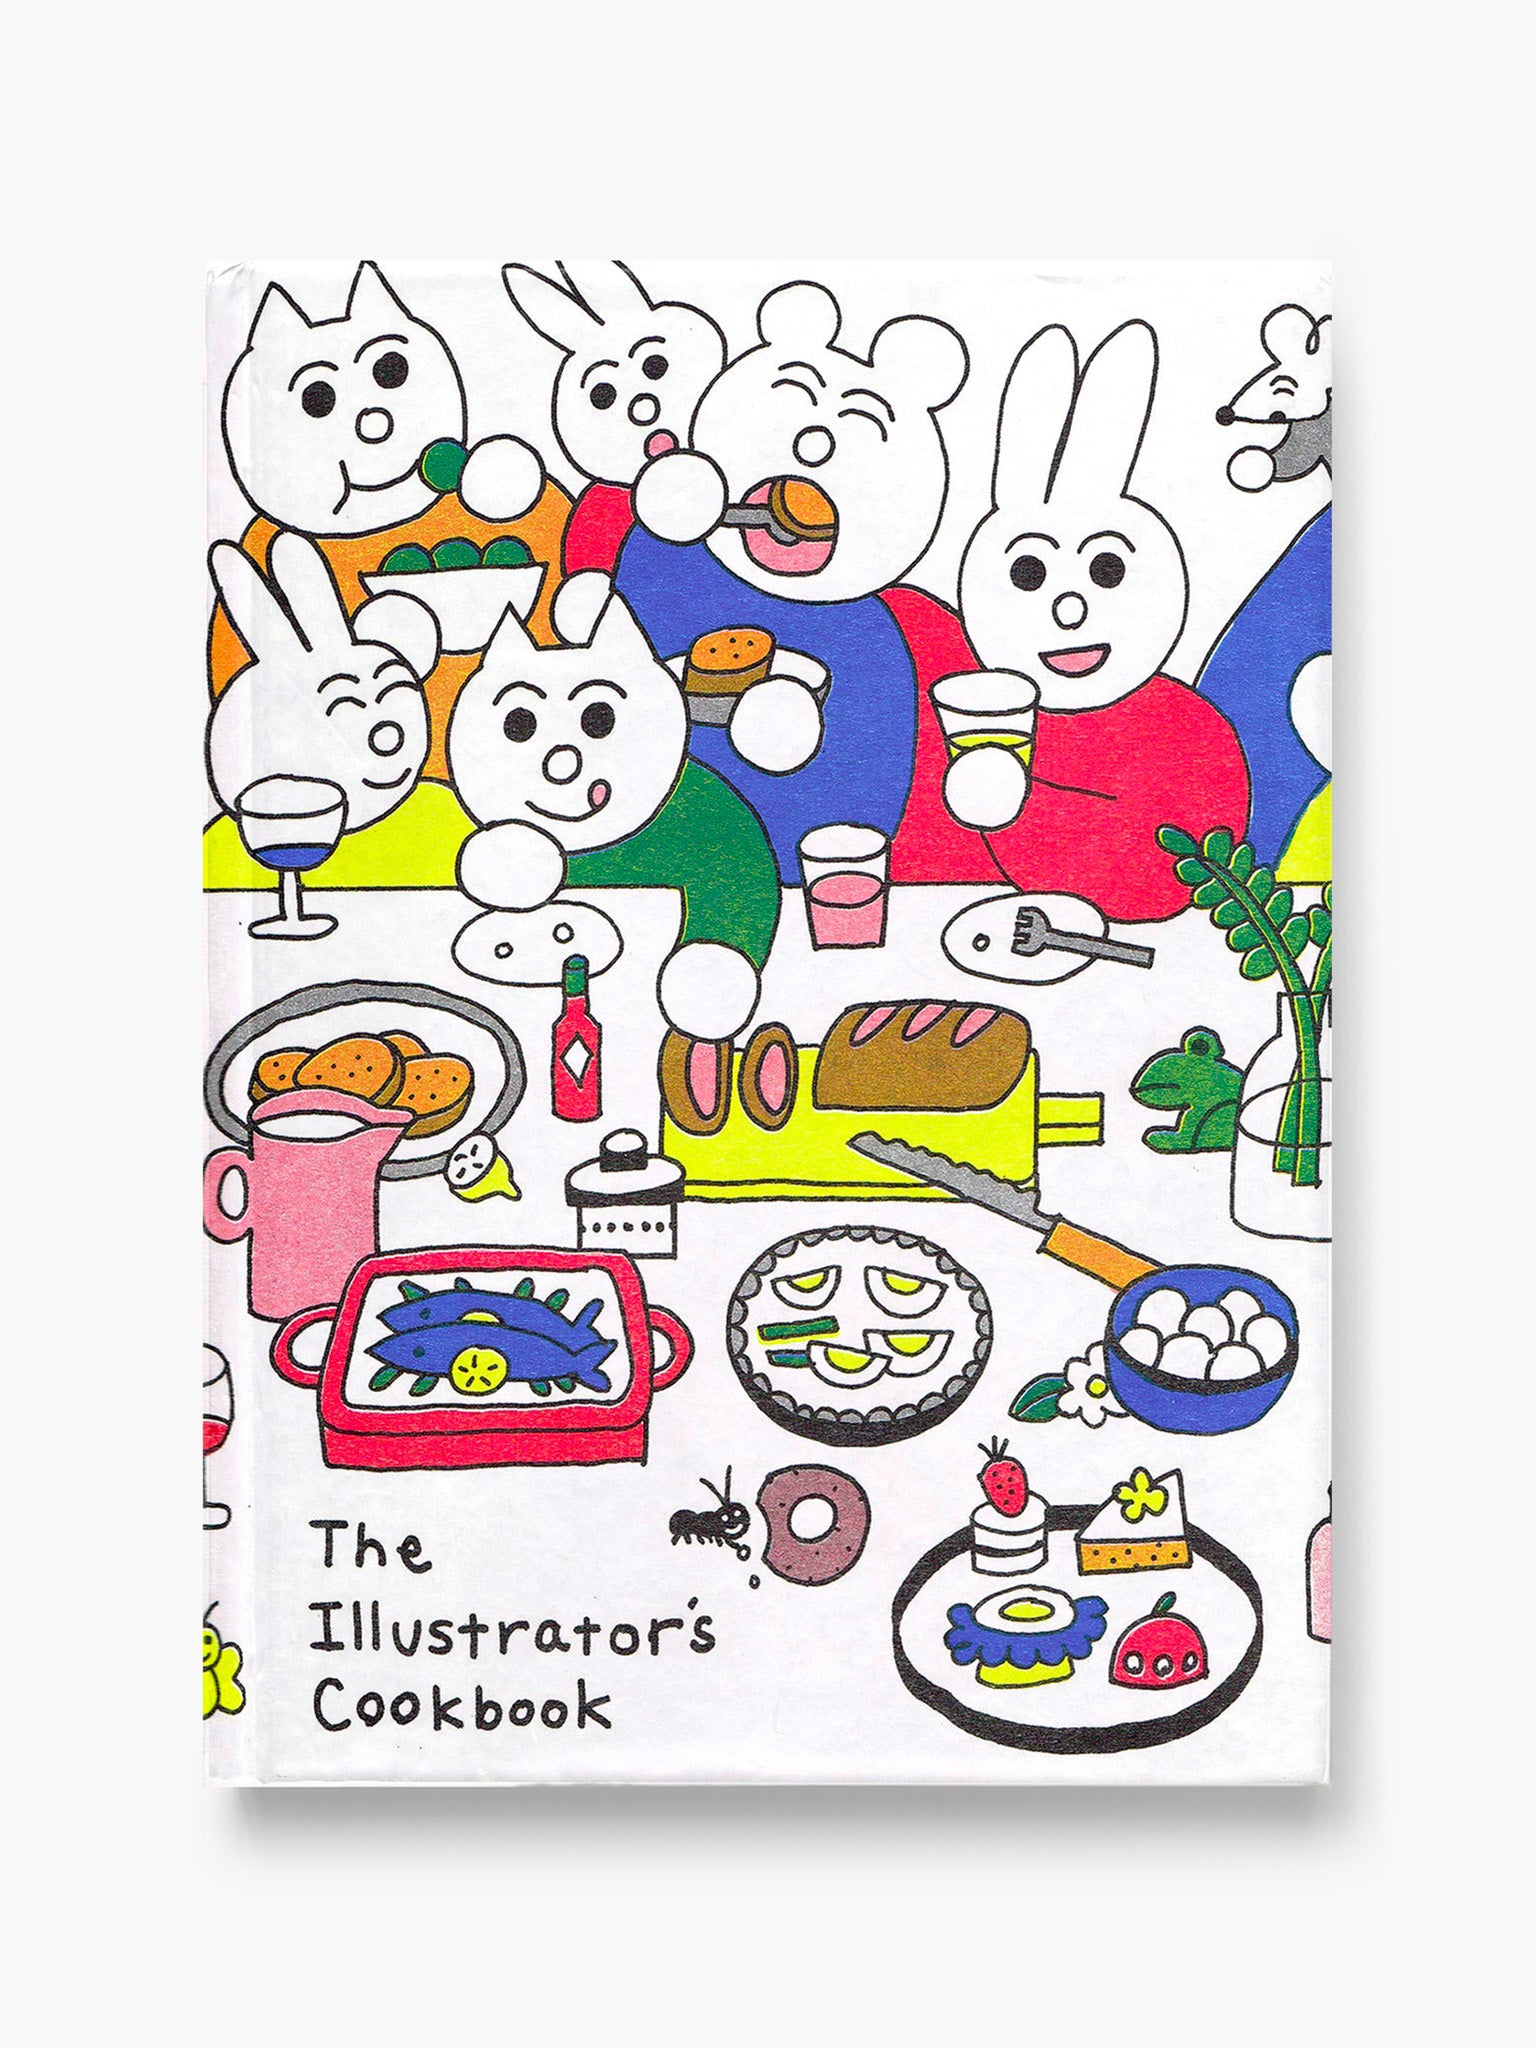 The Illustrator's Cookbook